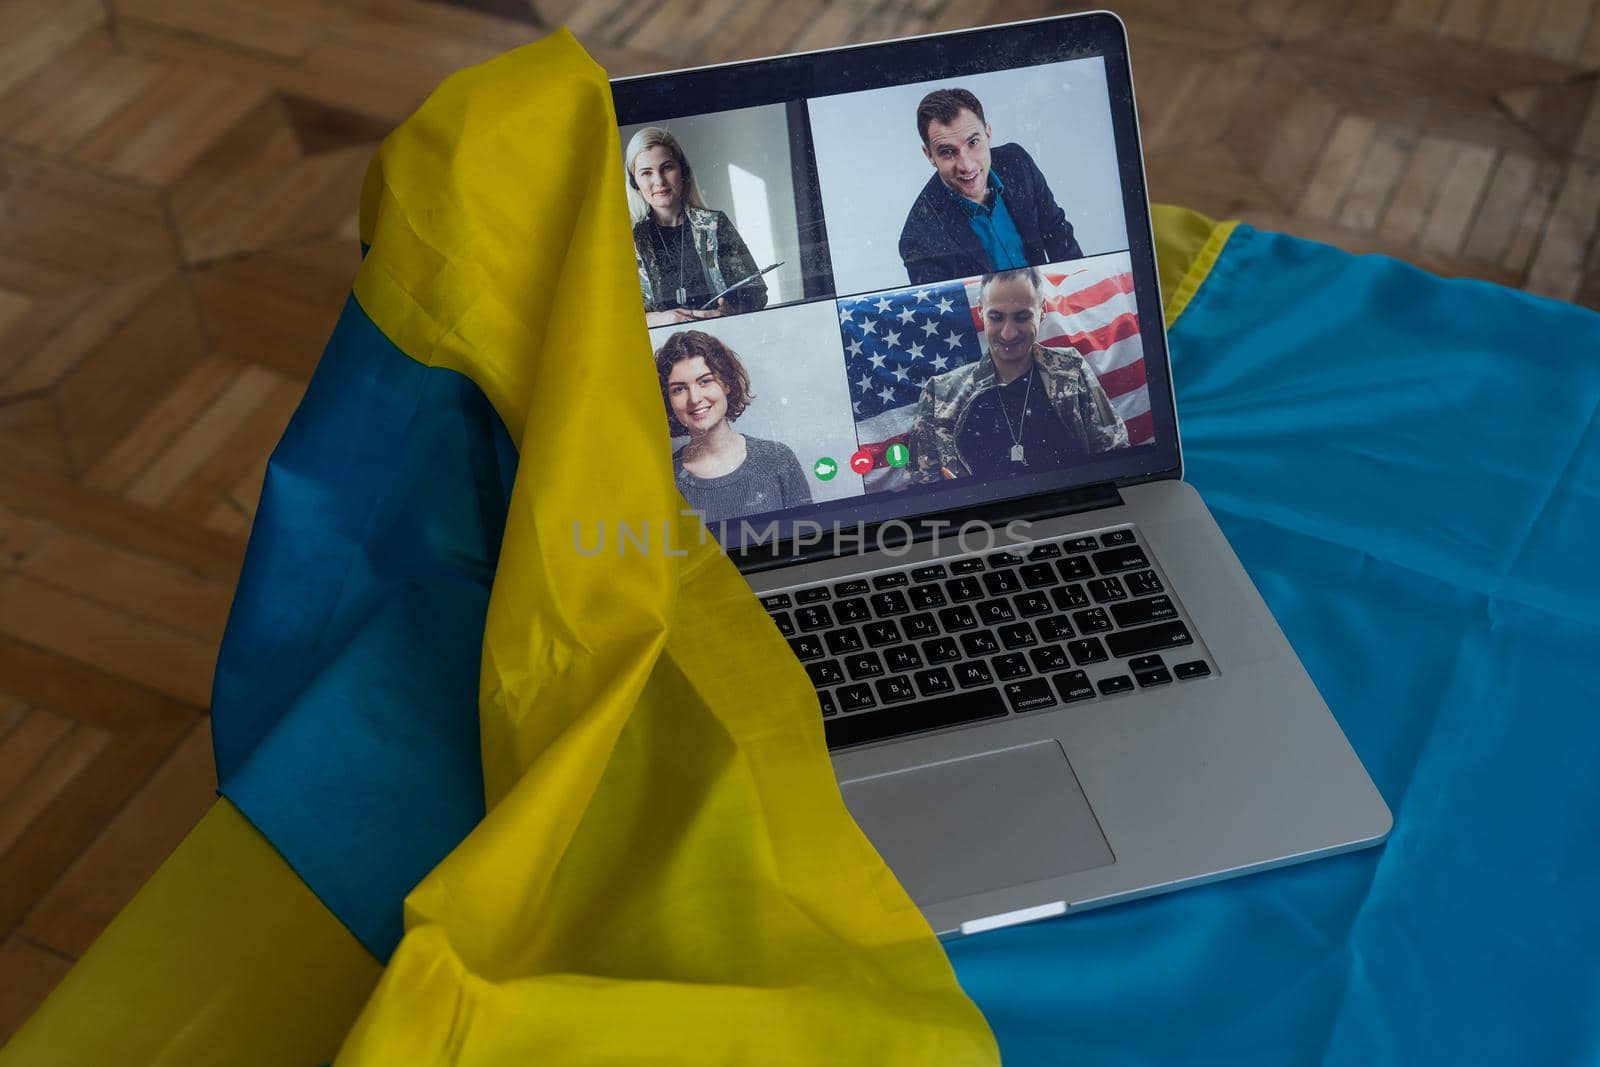 news about Ukraine on laptop. flag of ukraine background